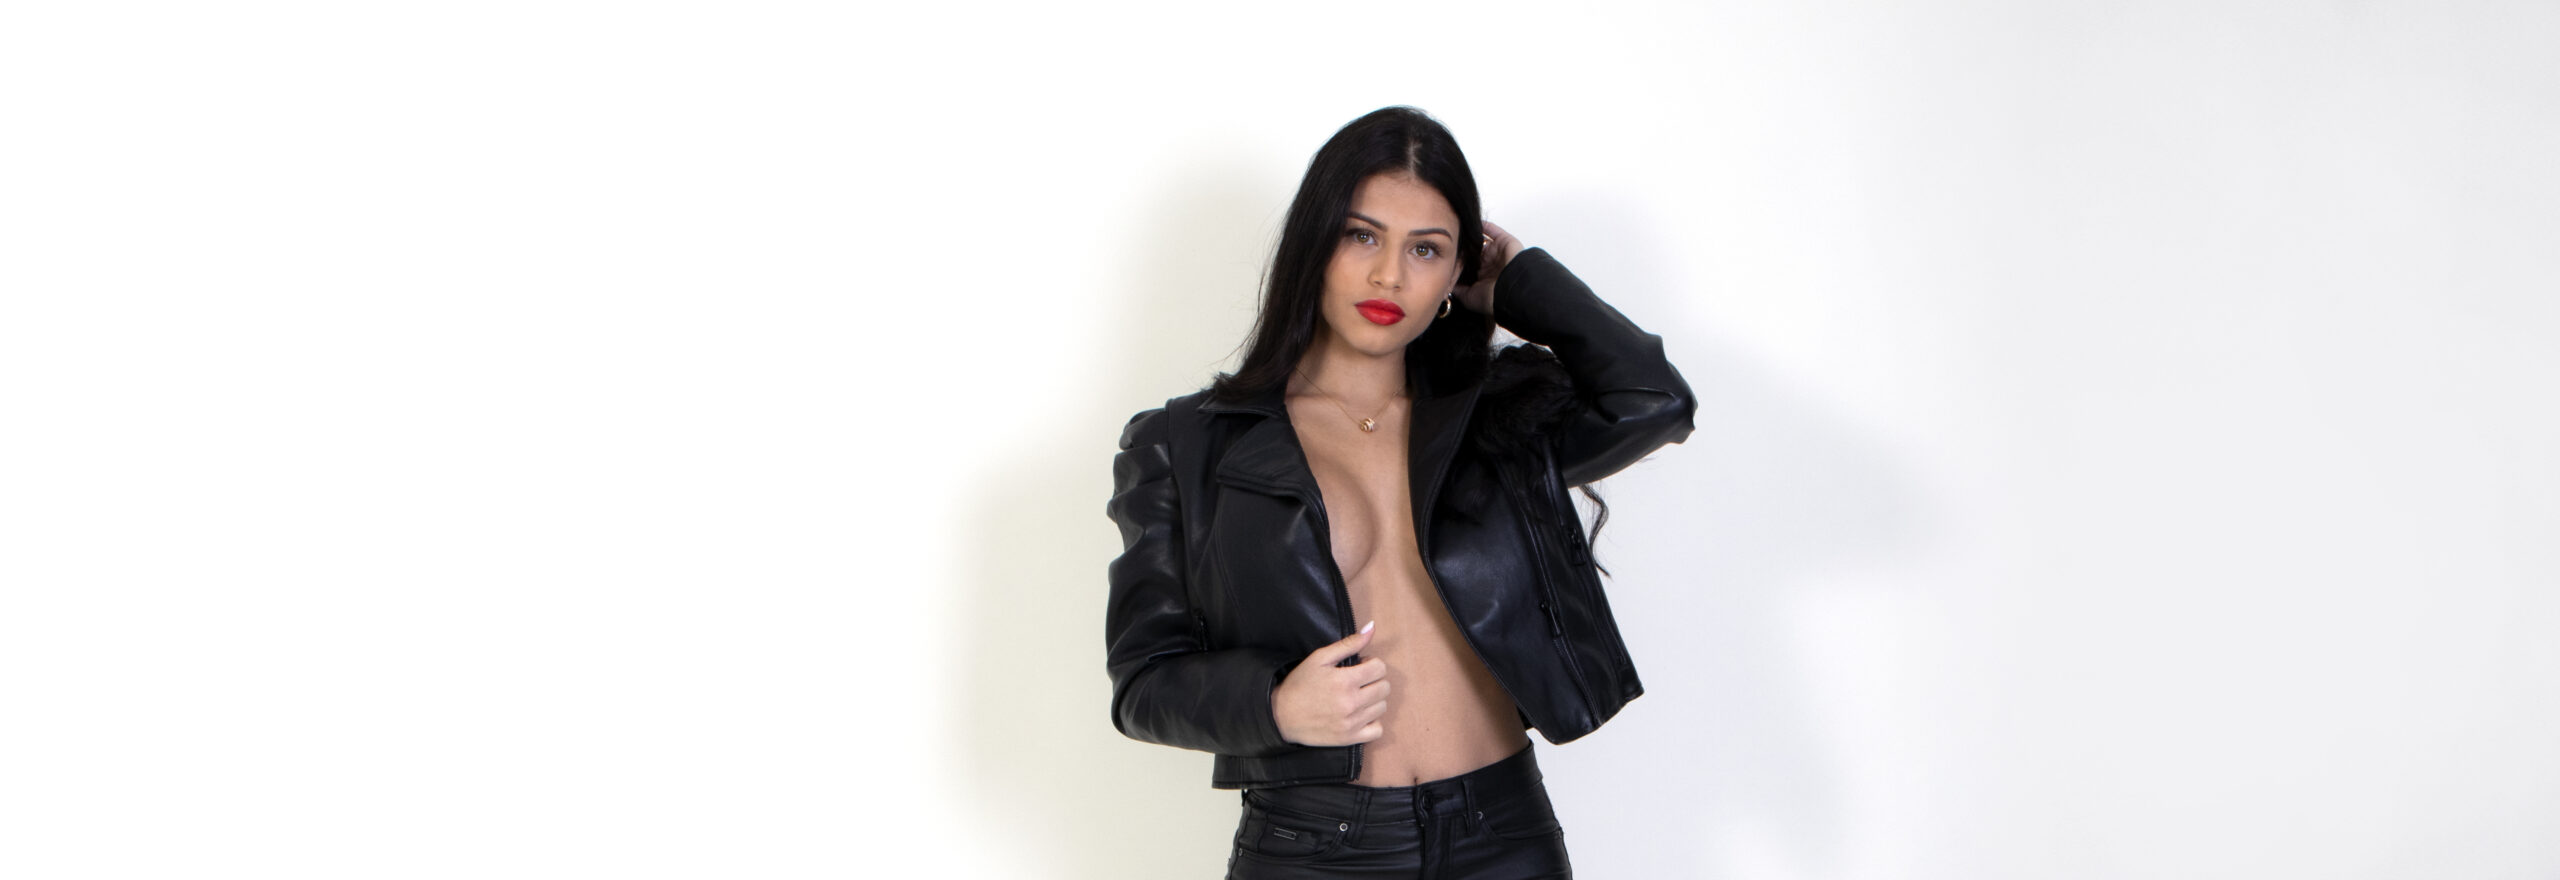 Latin model Stephanie posing in black for Costapix